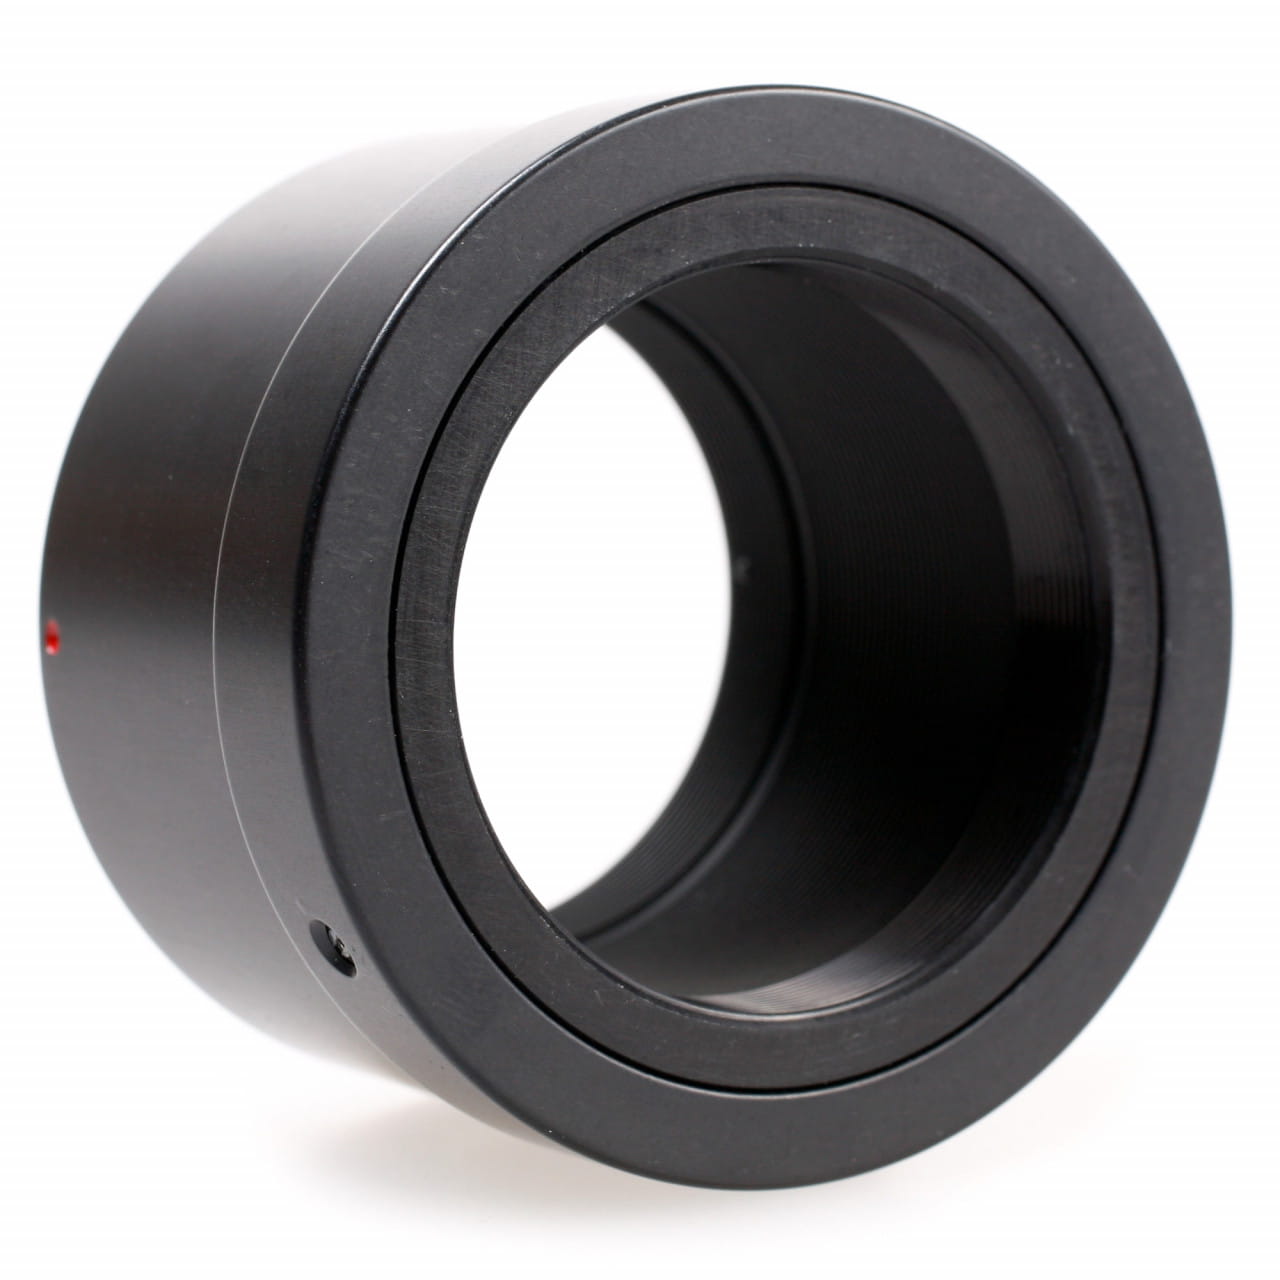 Novoflex Adapter für T2-Objektiv an Sony-E-Mount Kamera – z.B. für Sony a7-Serie NEX/T2